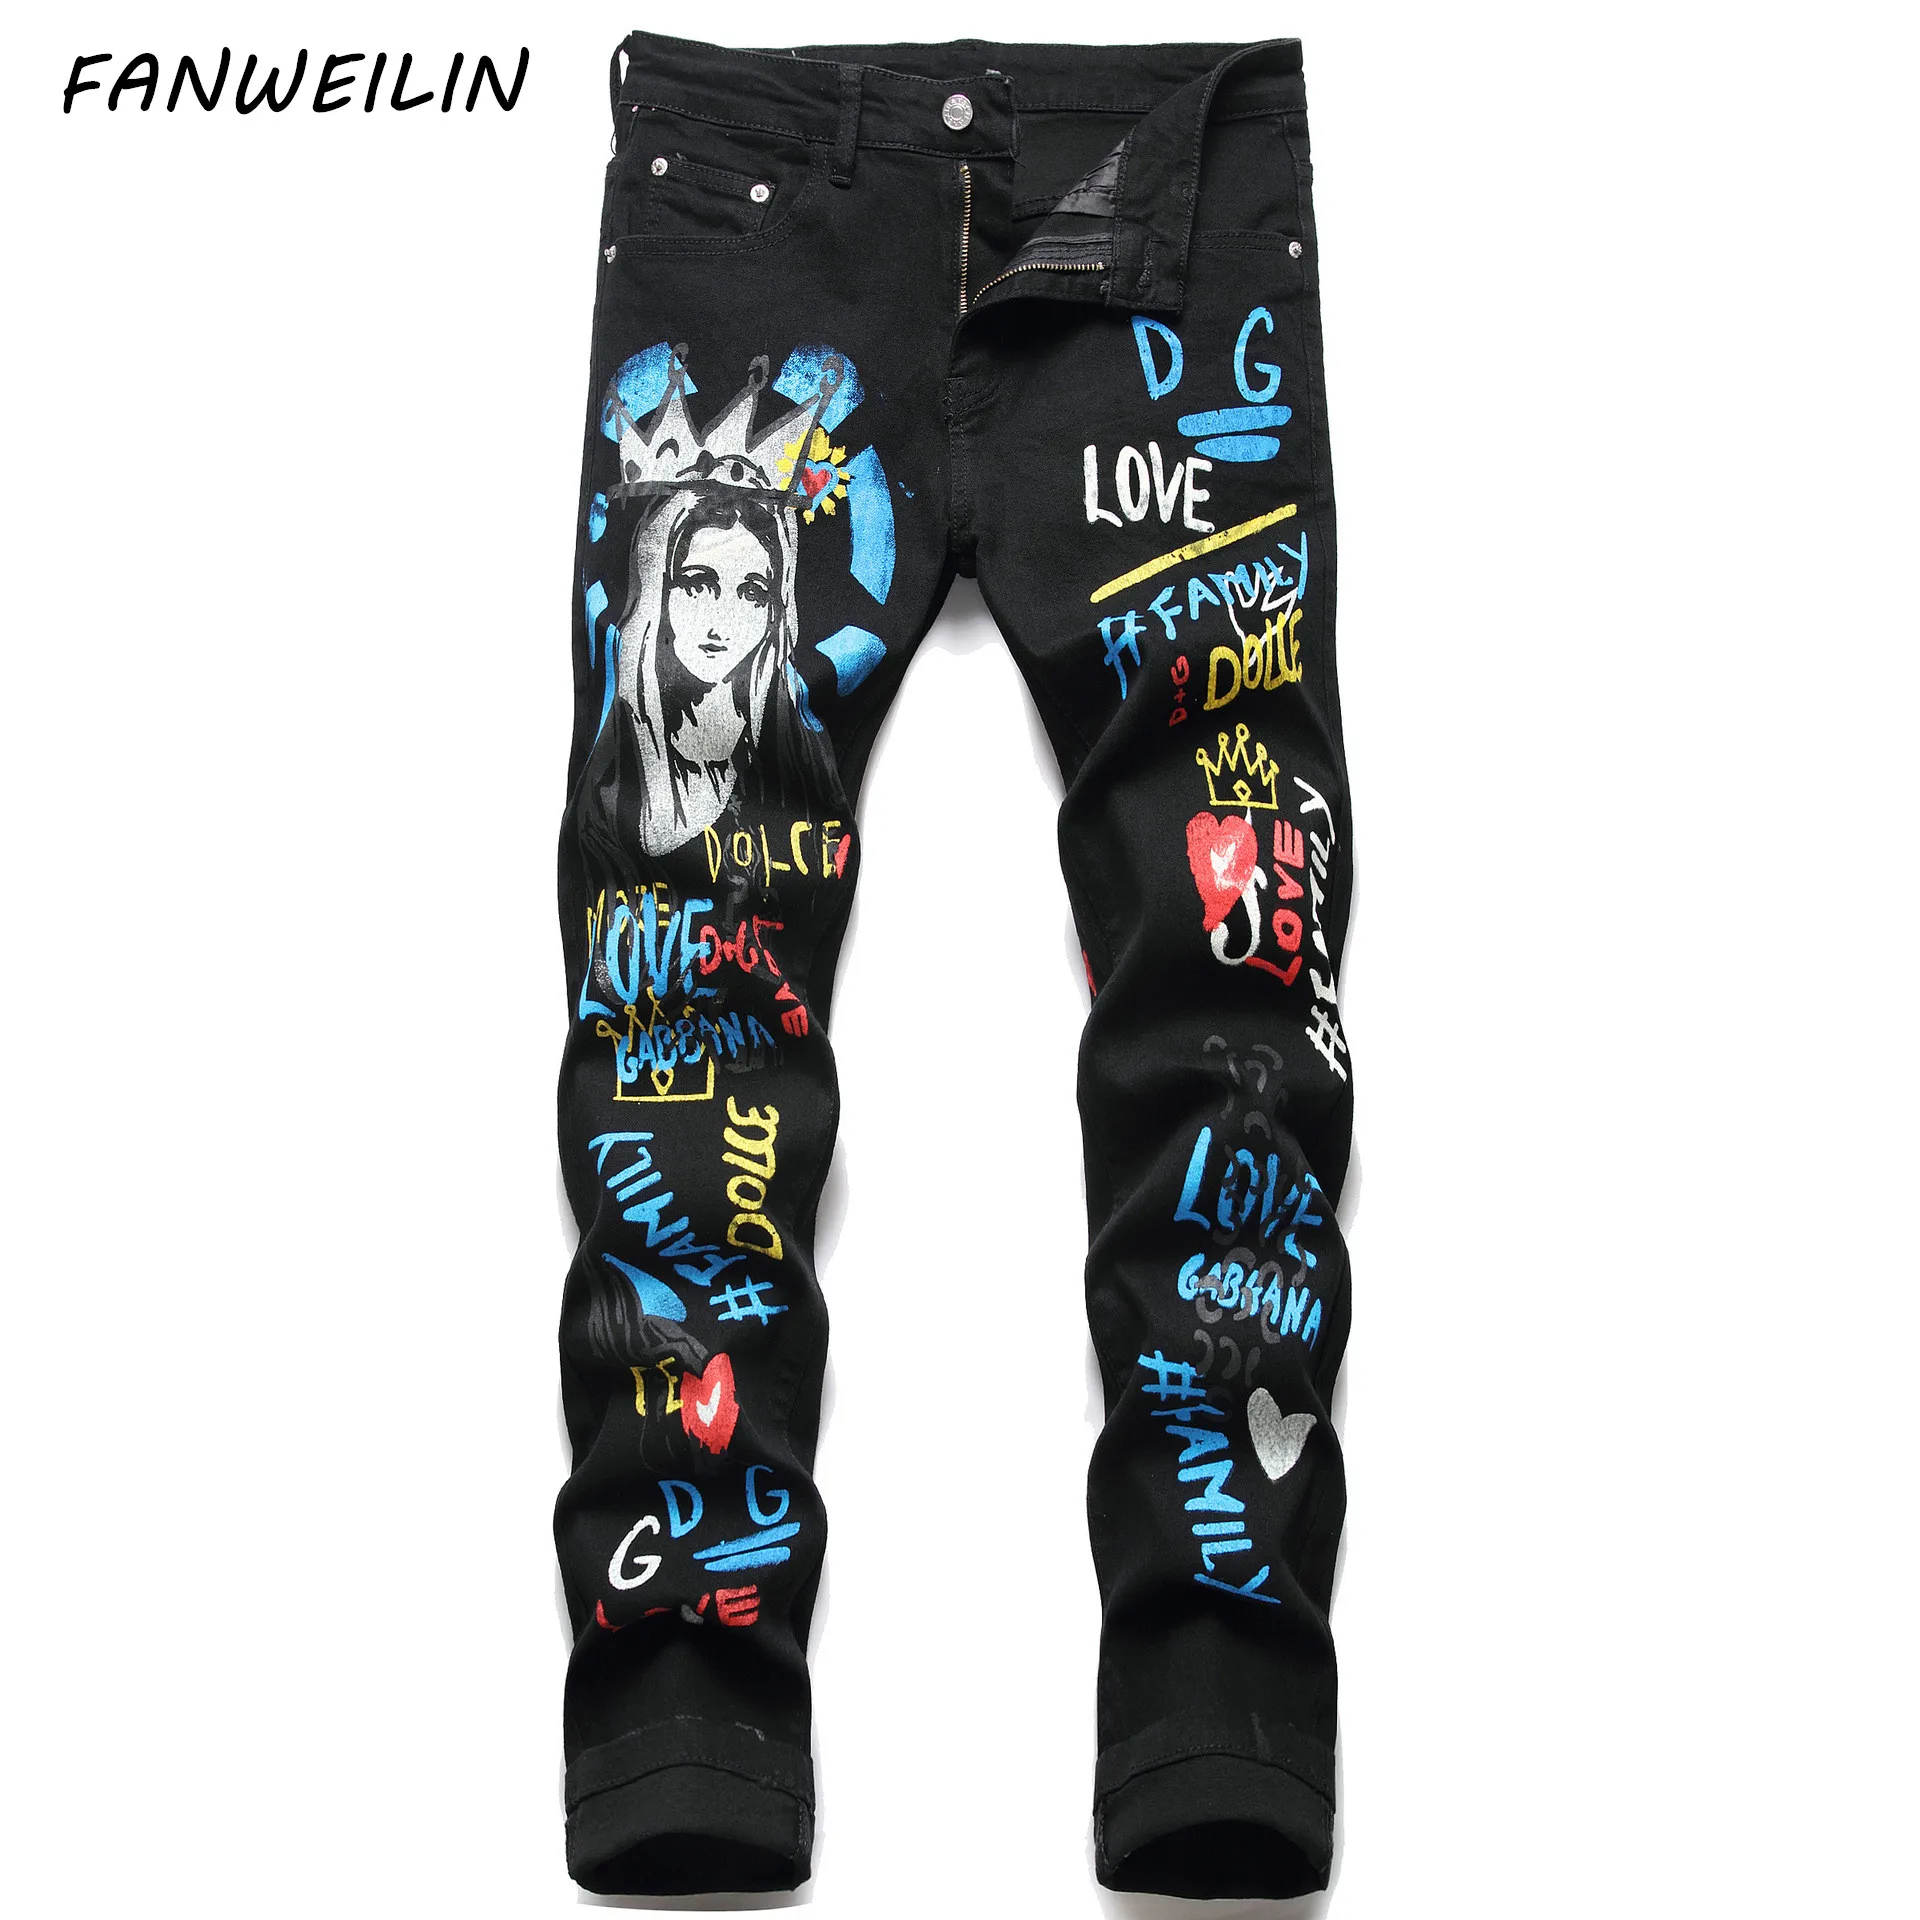 2021New Men's Fashion Skinny Black Jeans Male Colored Drawing Printed Graffiti Men Jean Pants Hip Hop Biker Jeans Pantalon Homme